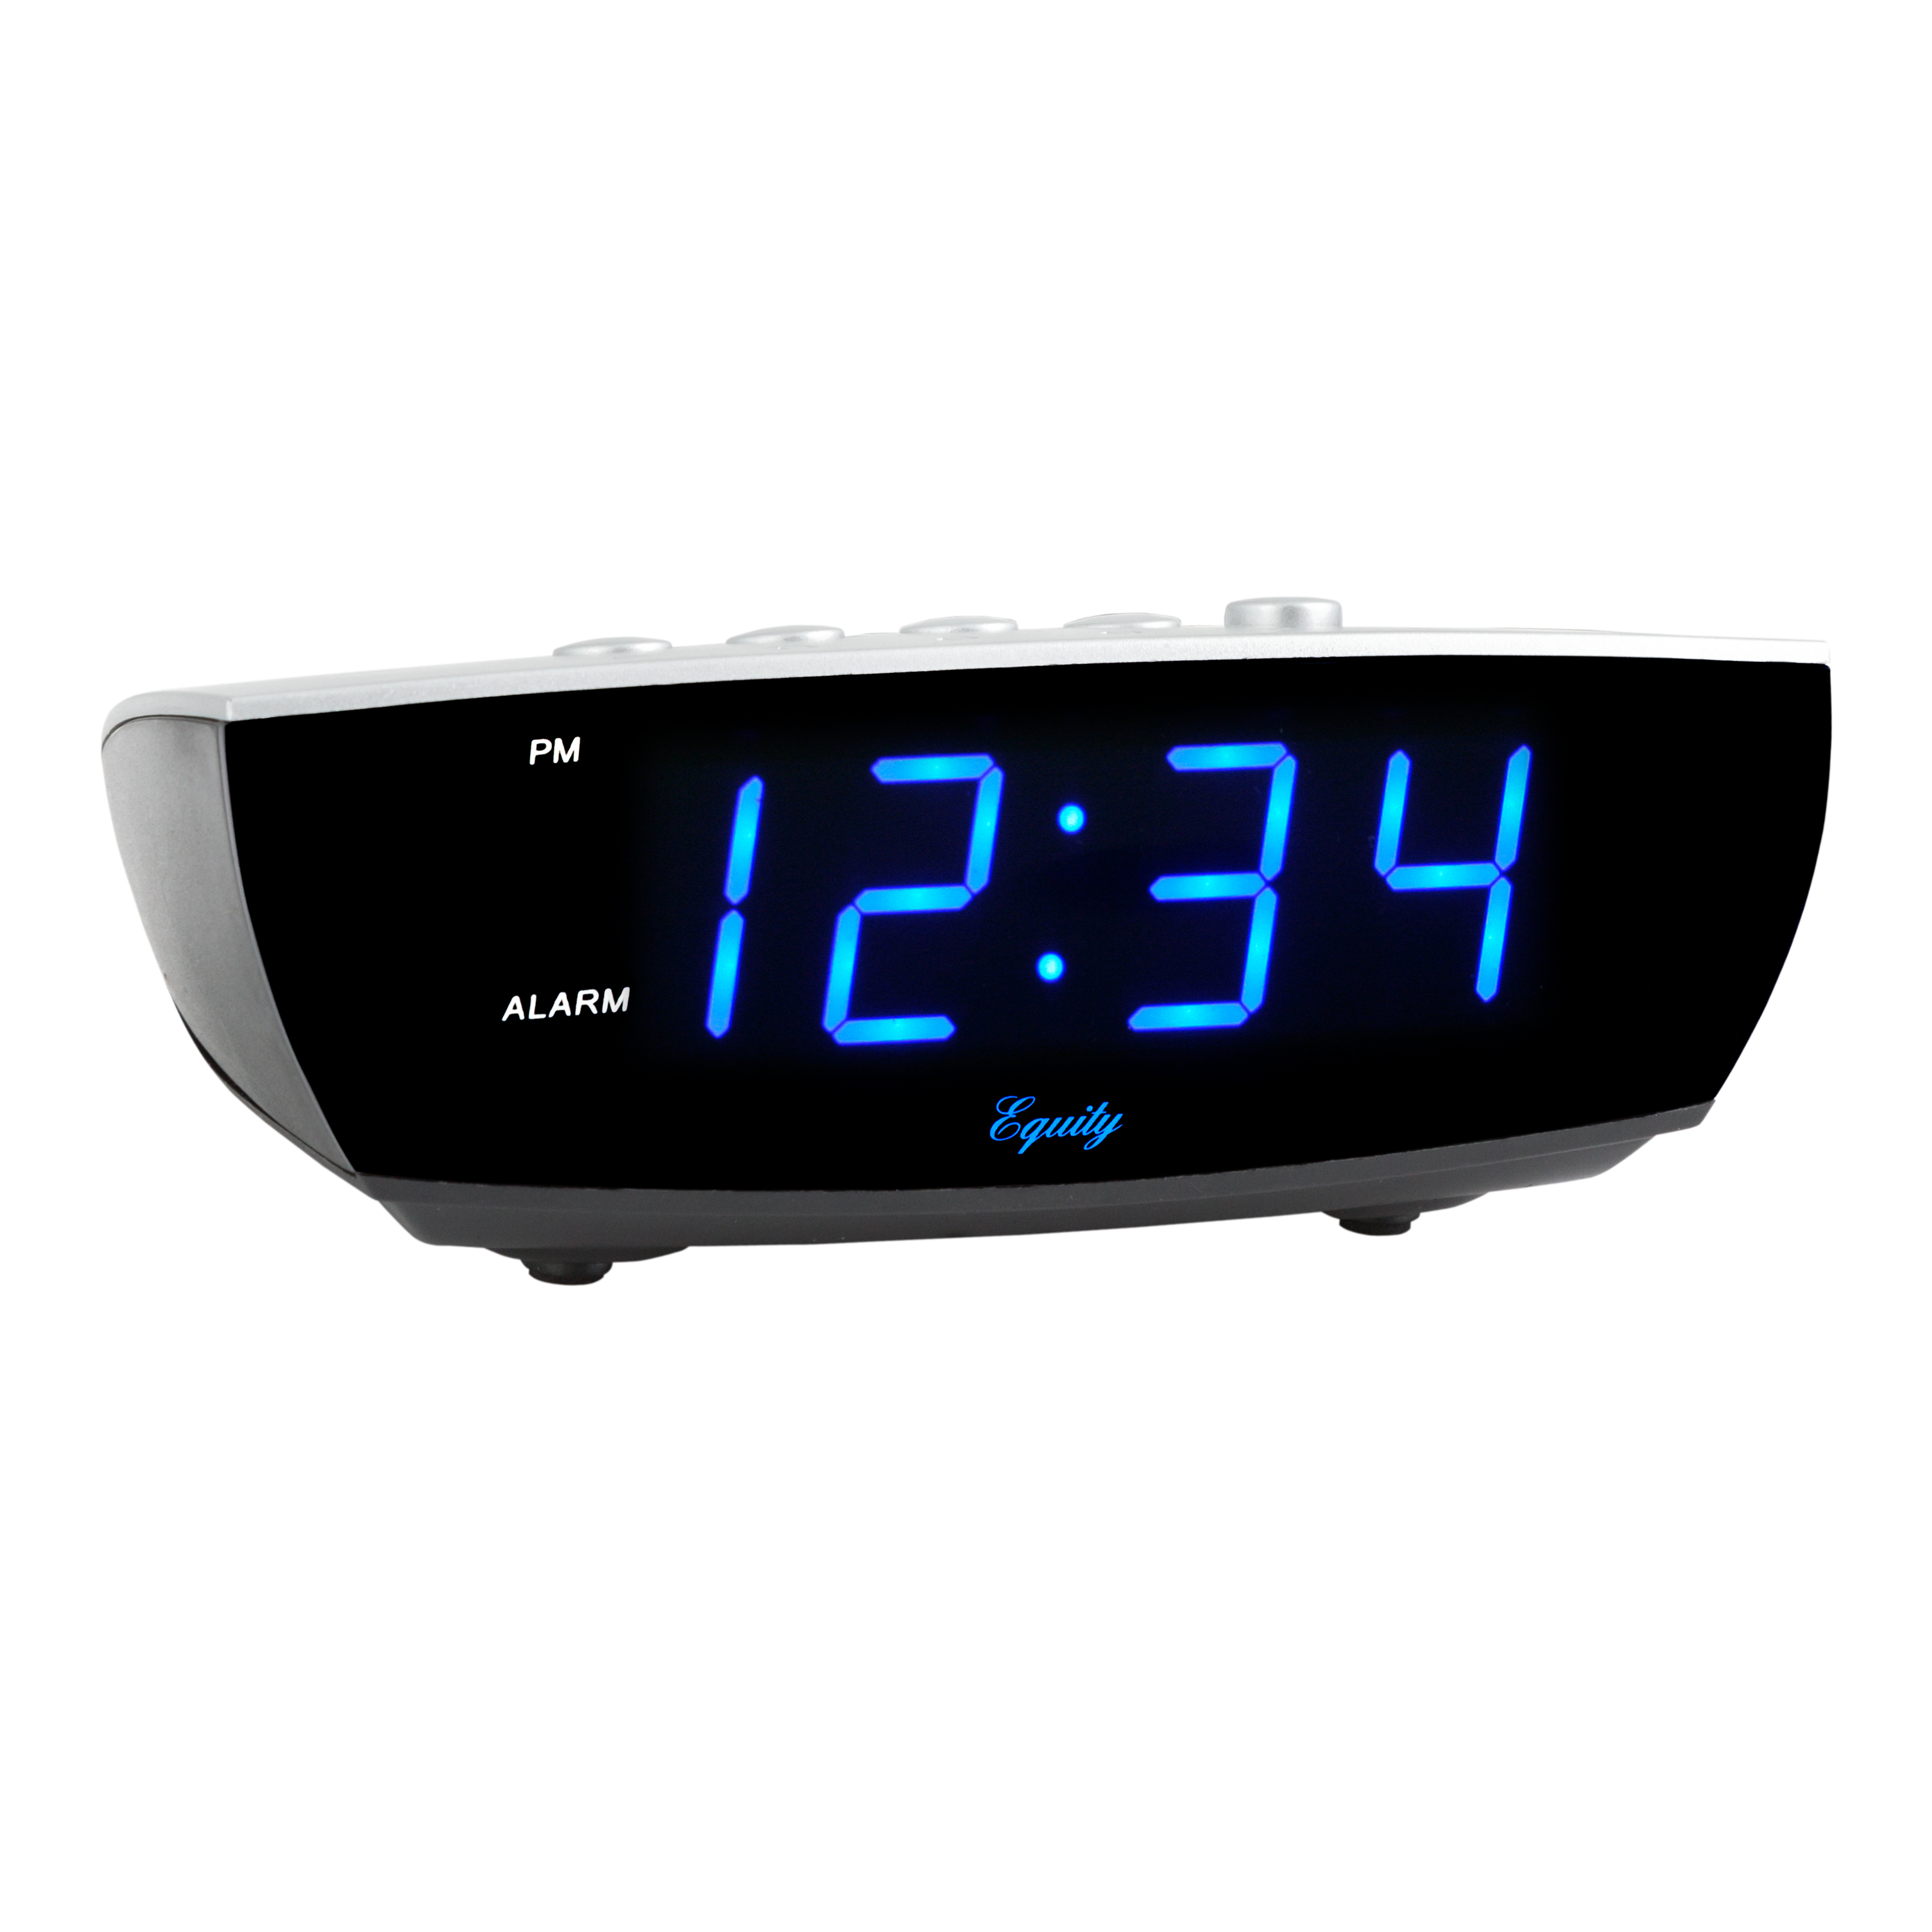 Equity by La Crosse 75903 0.9" Blue LED Digital Desktop Alarm Clock - image 4 of 5